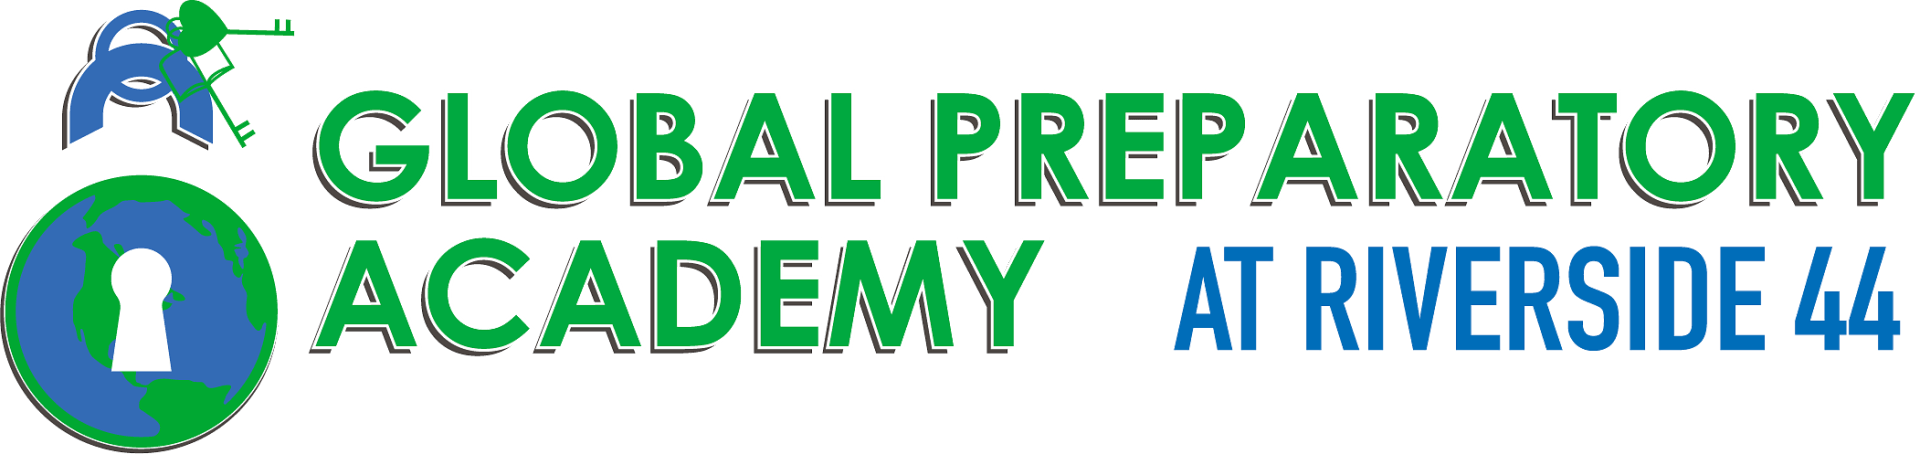 Global Preparatory Academy